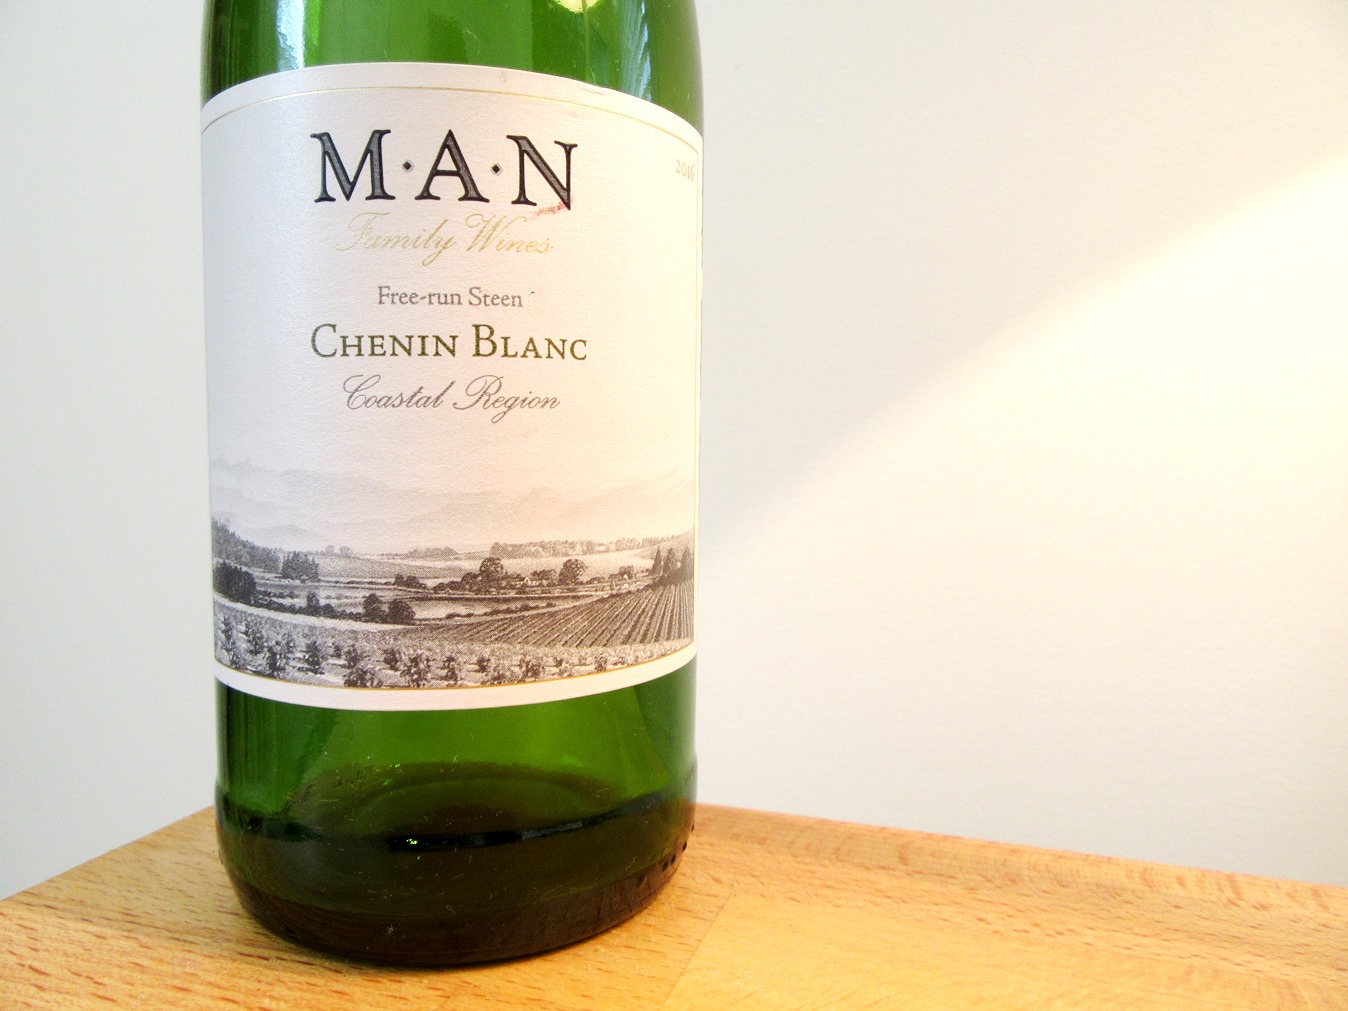 Man Family Wines, Free-Run Steen Chenin Blanc 2016, Coastal Region, South Africa, Wine Casual